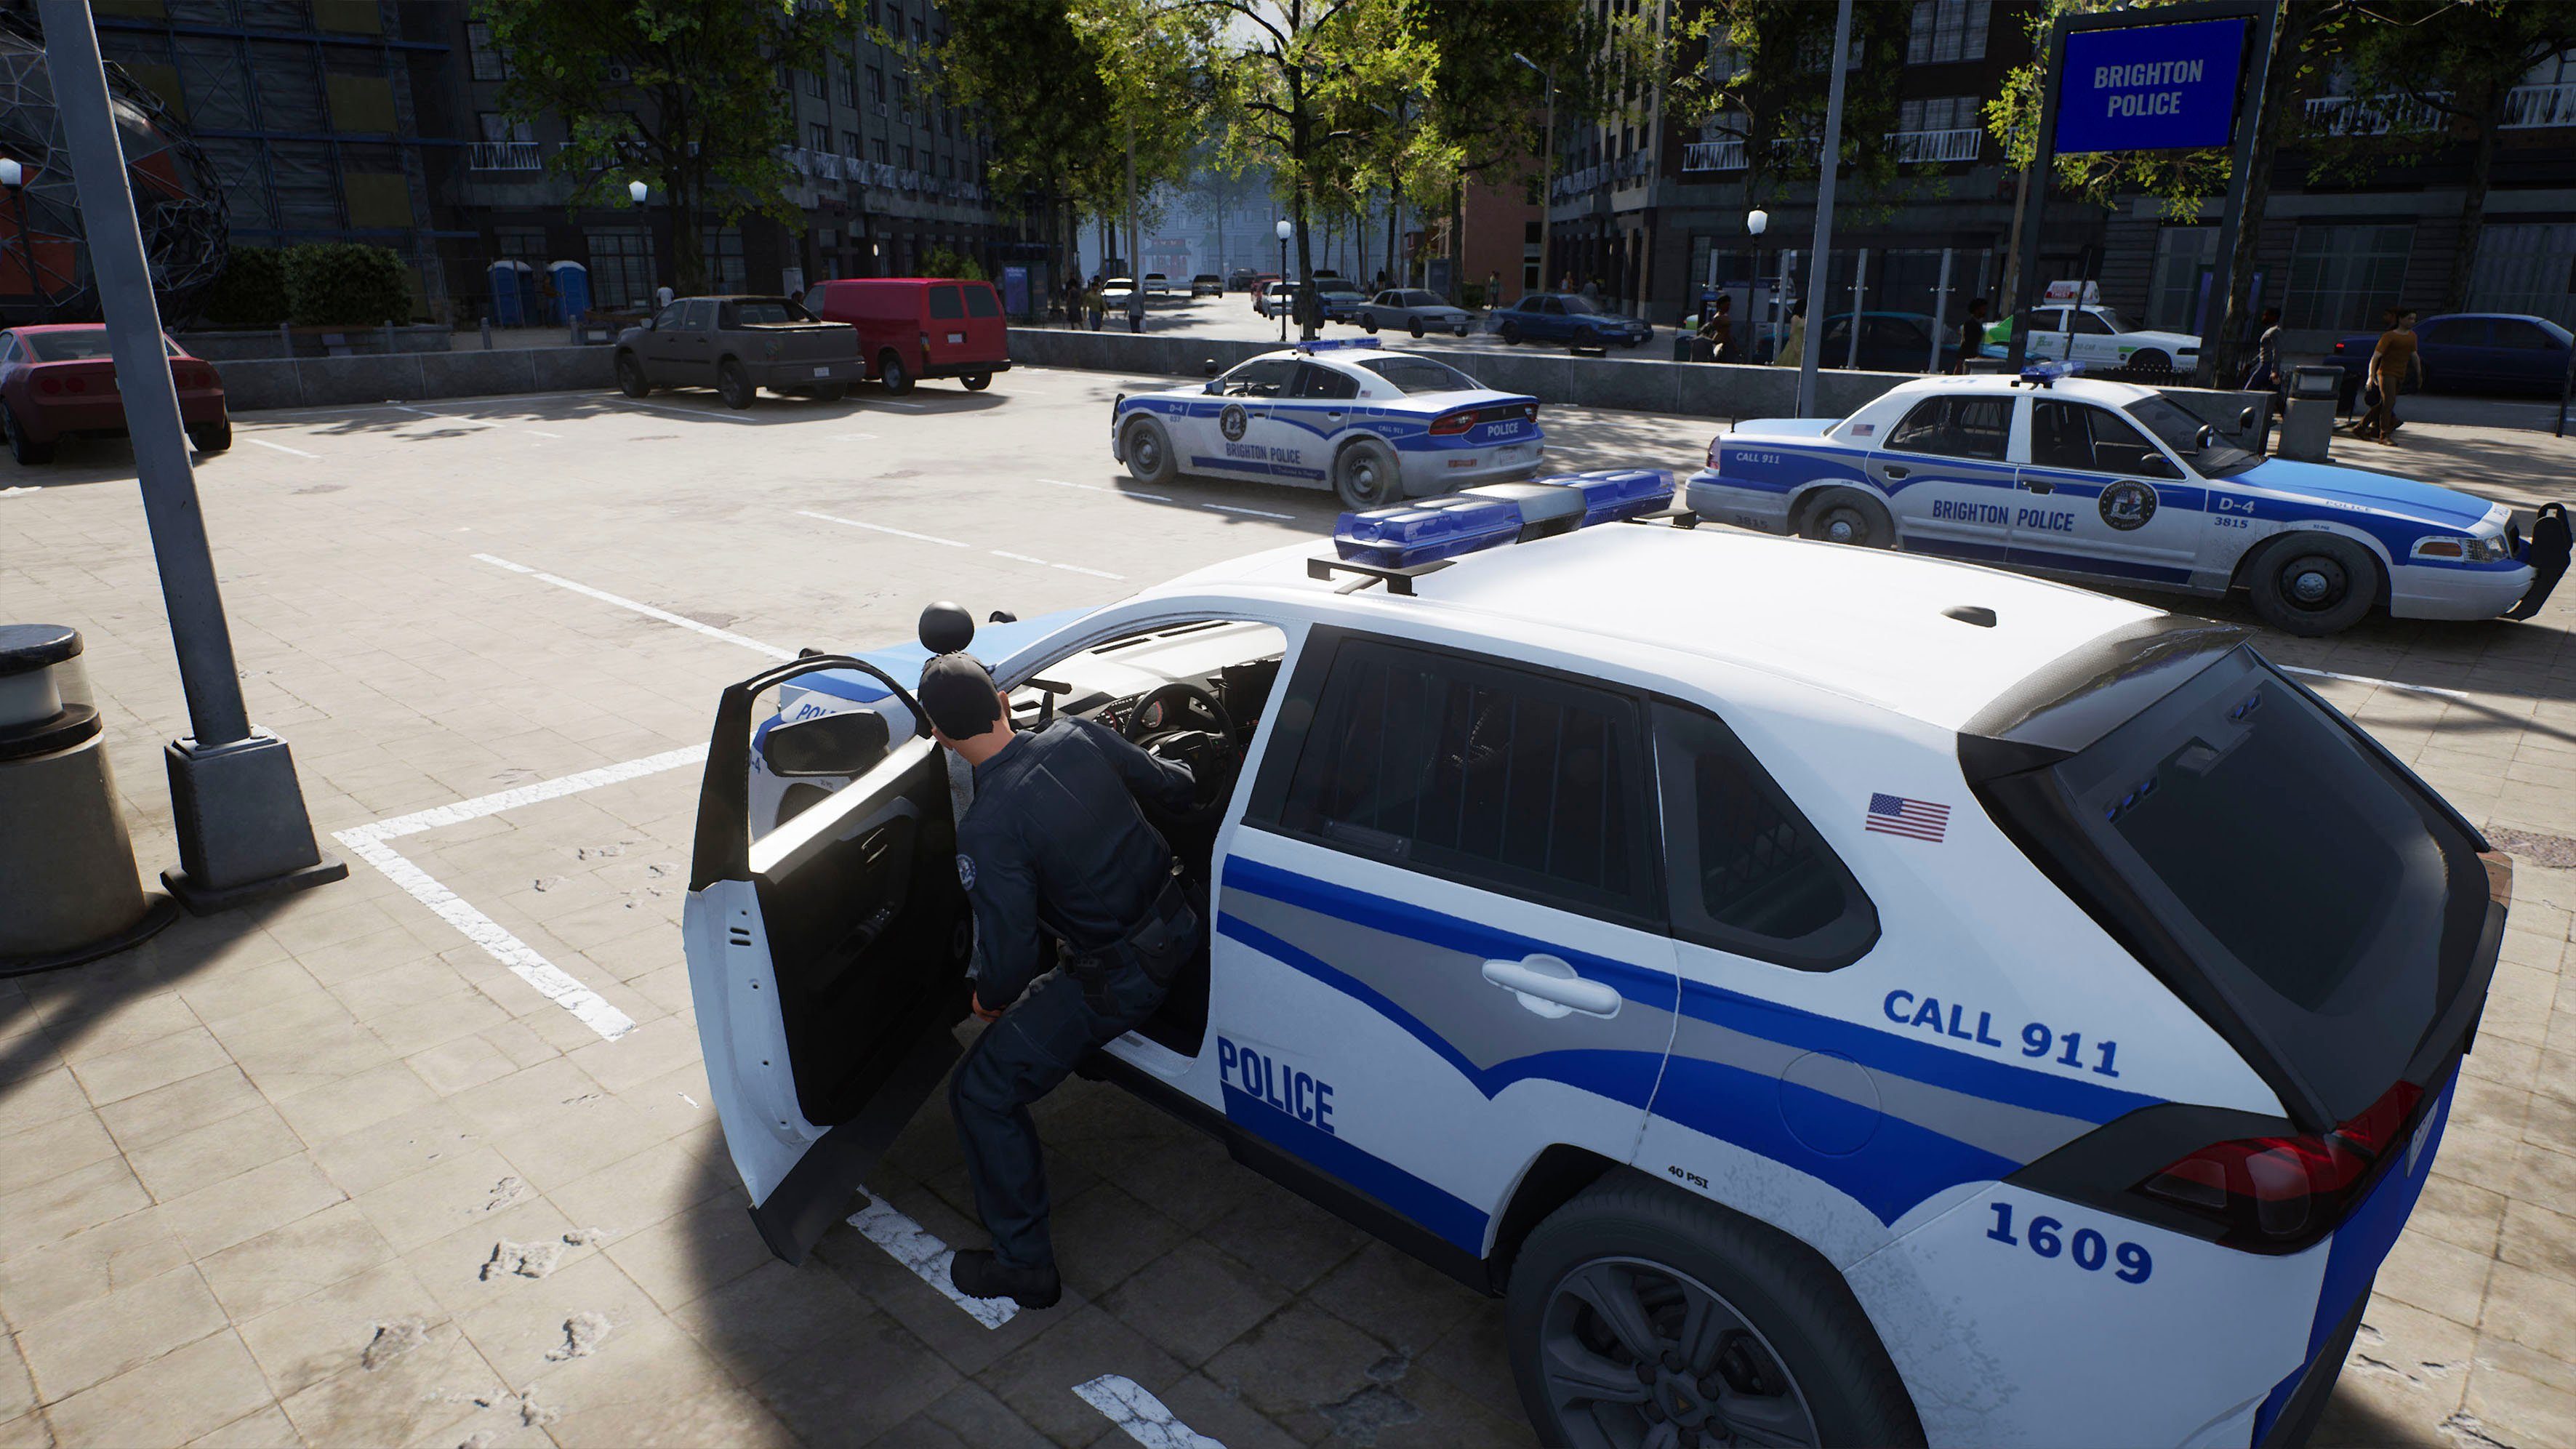 Patrol PlayStation Simulator: Astragon Officers Police 4